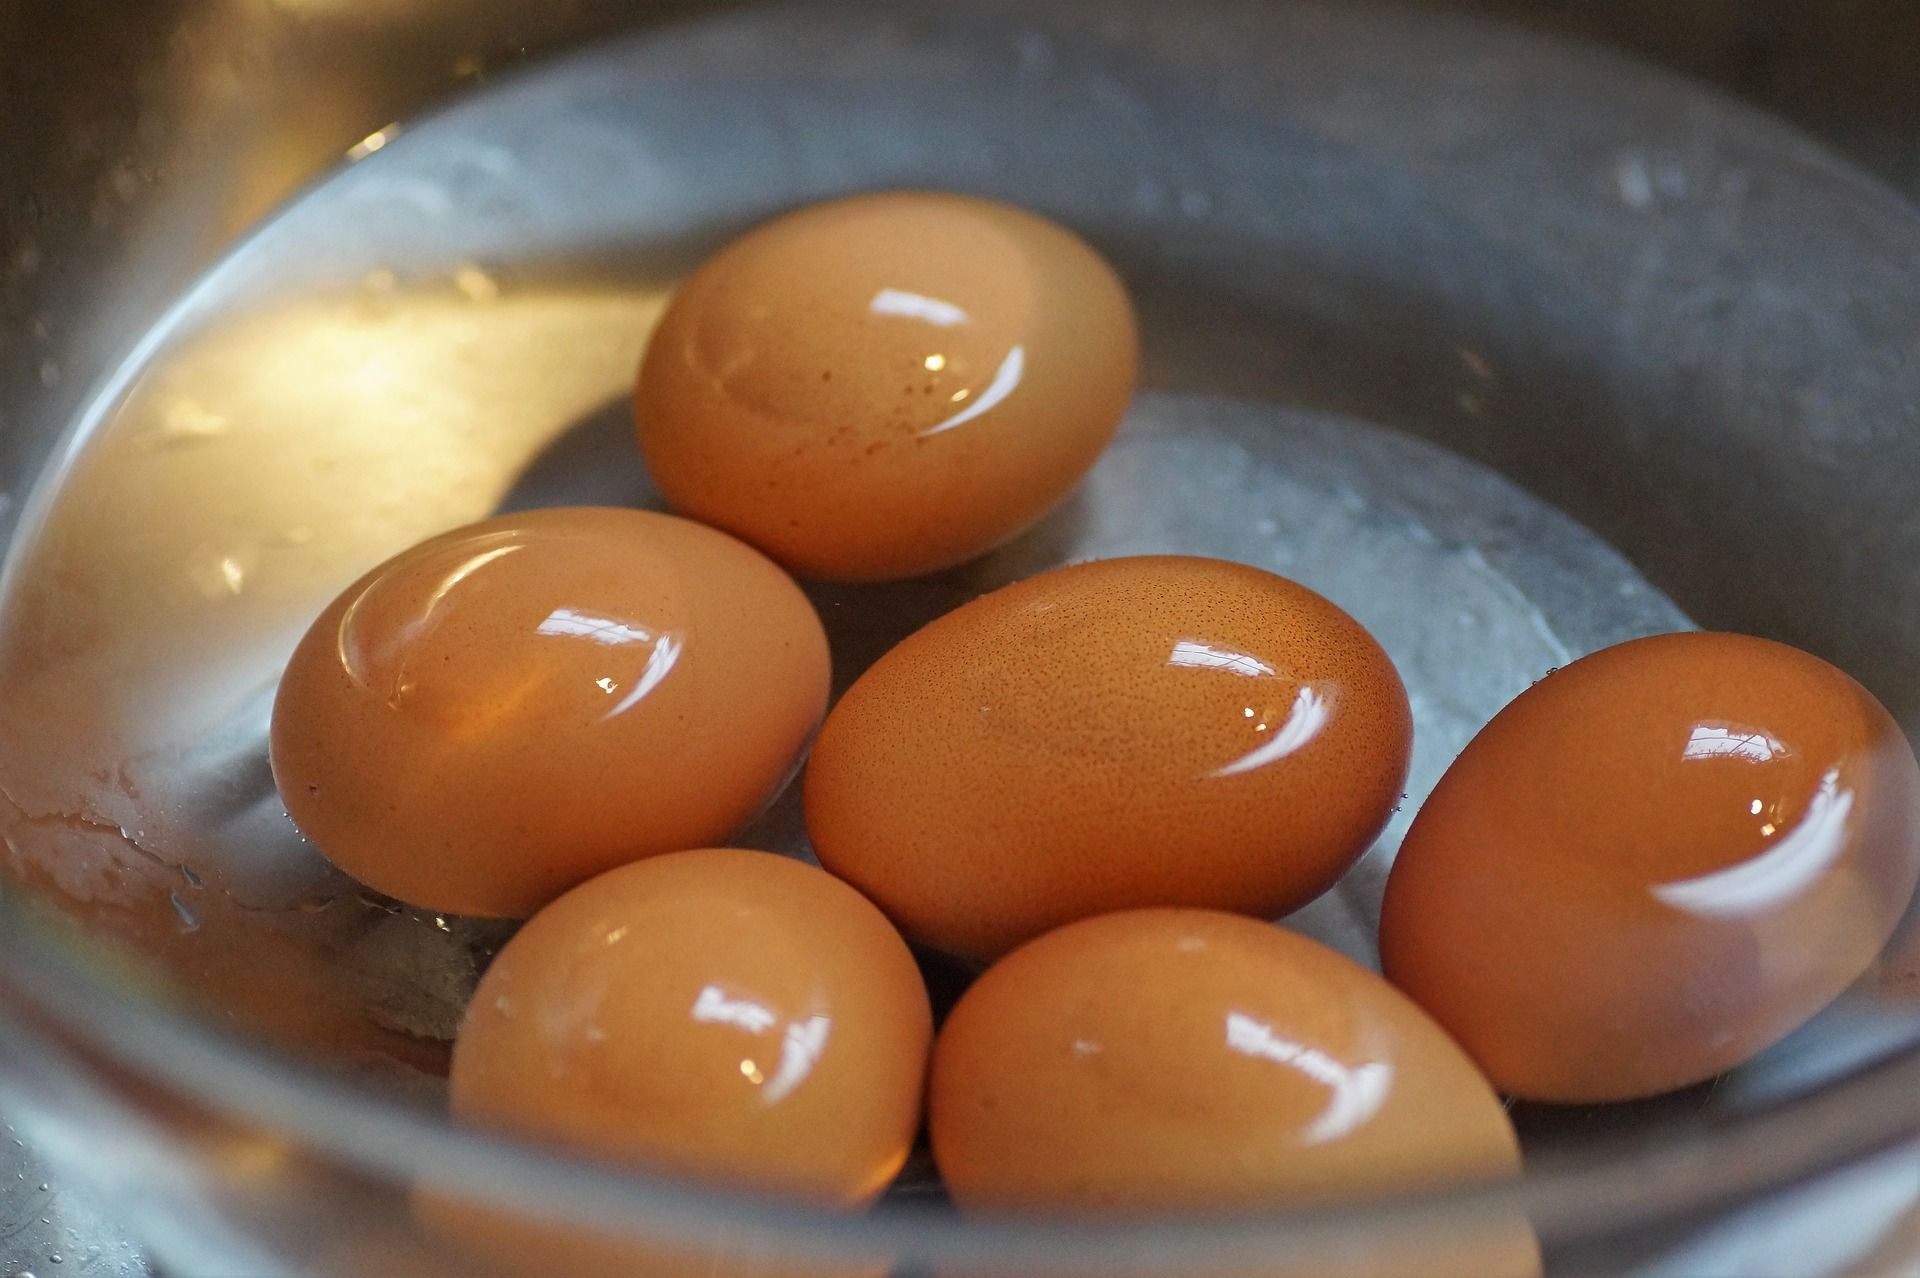 Boiling Eggs